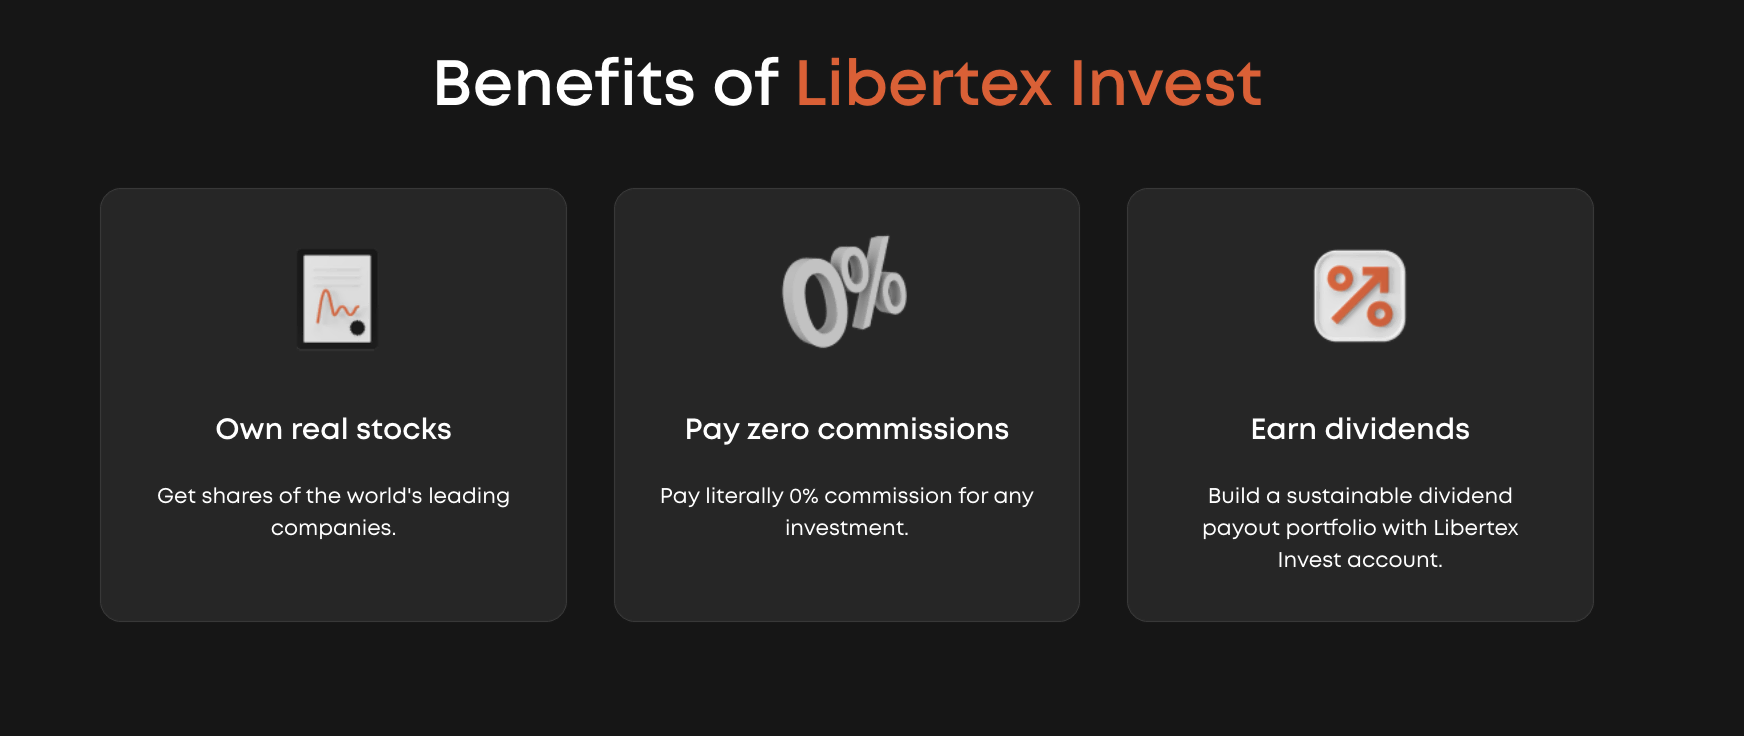 Libertex निवेश के लाभ